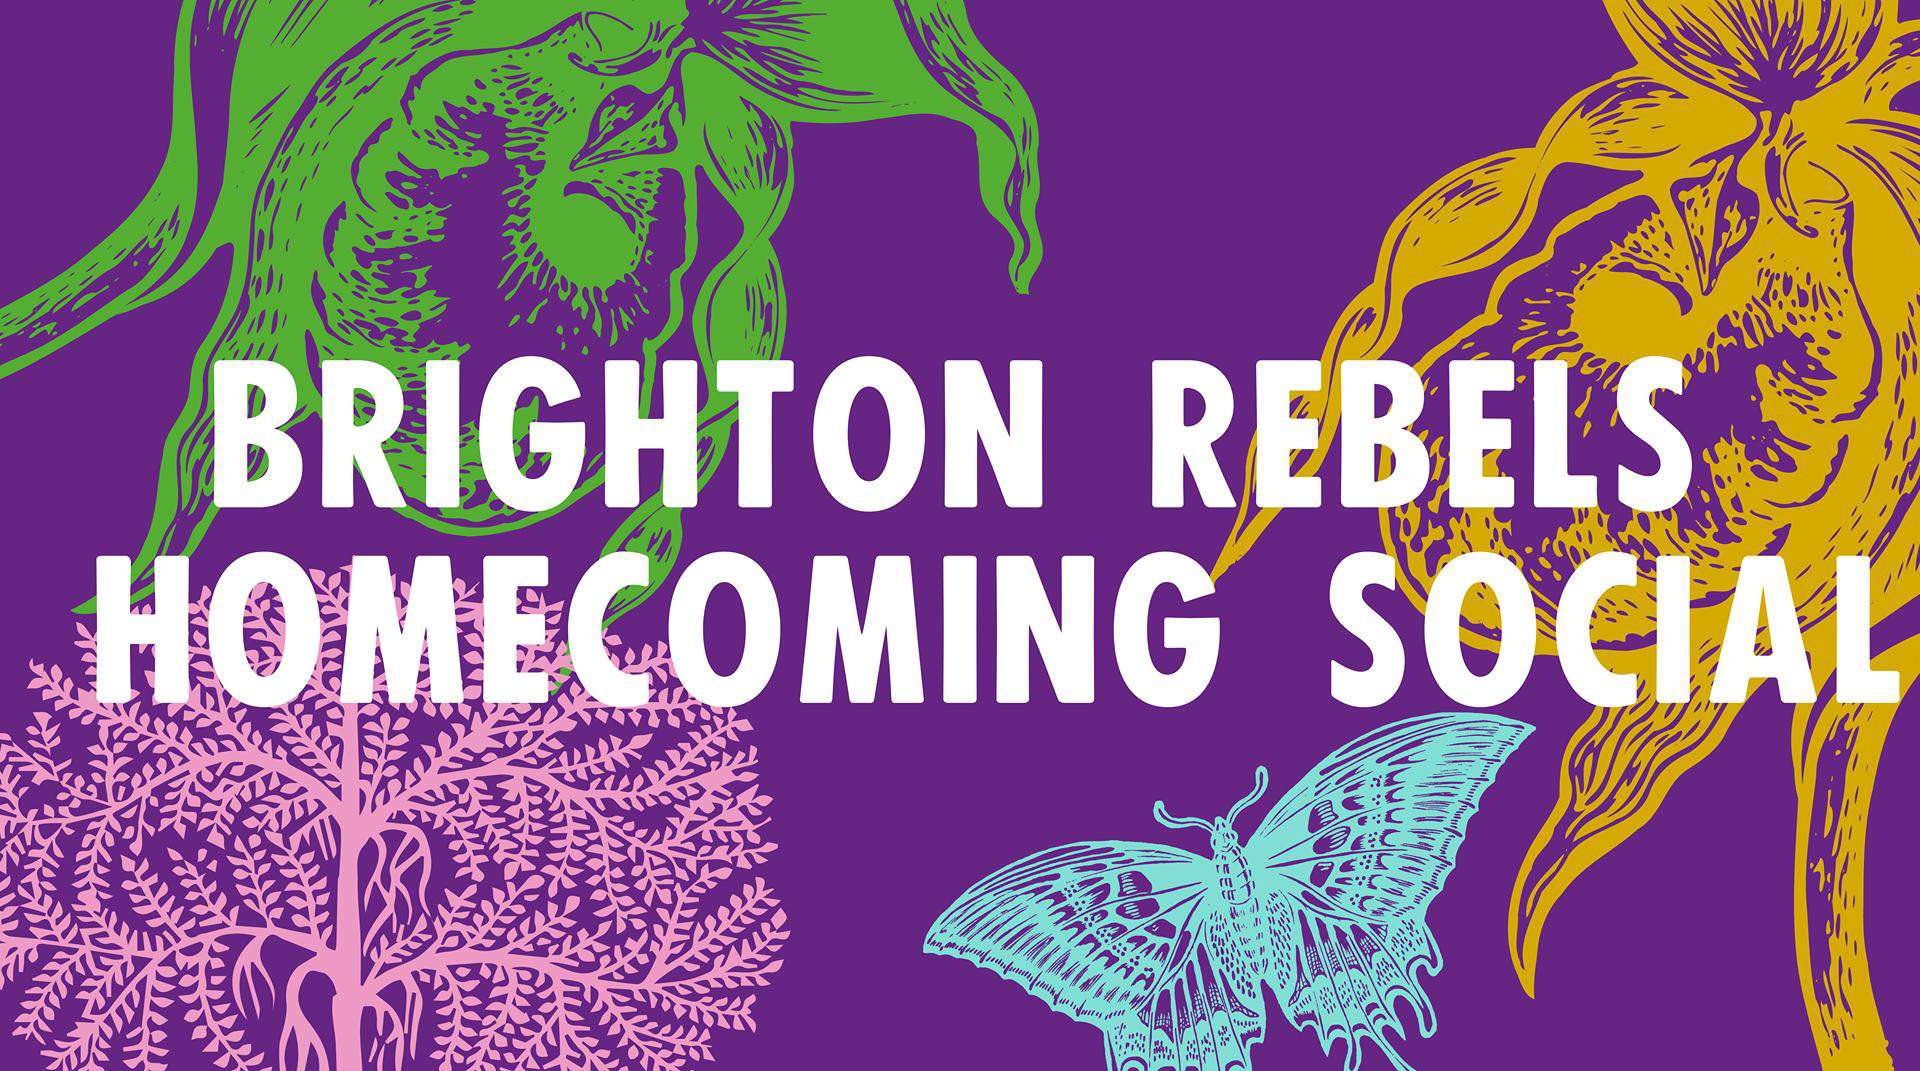 Brighton Rebels Social Extinction Rebellion Brighton